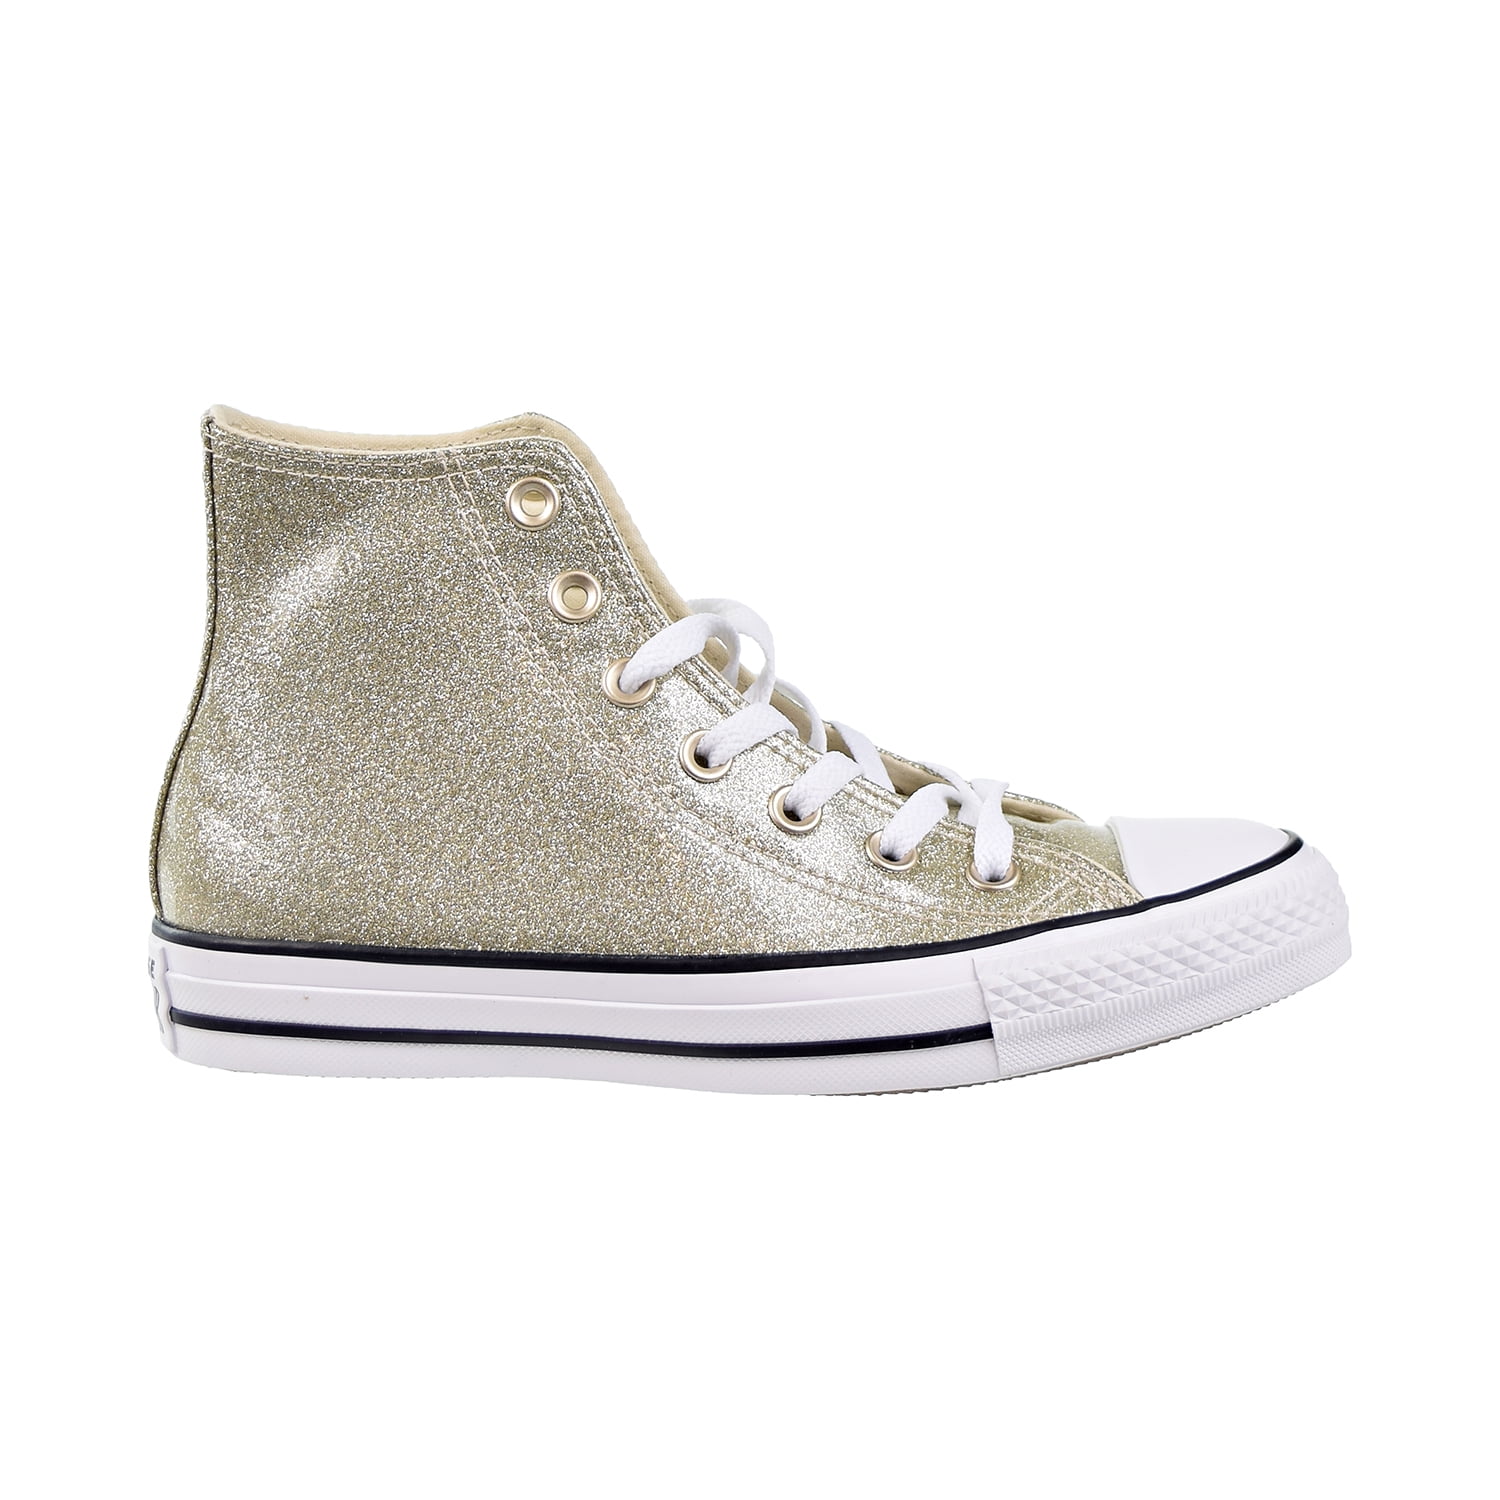 Converse Chuck Taylor All Star HI Women's Shoes Light Gold-White 562481c -  Walmart.com